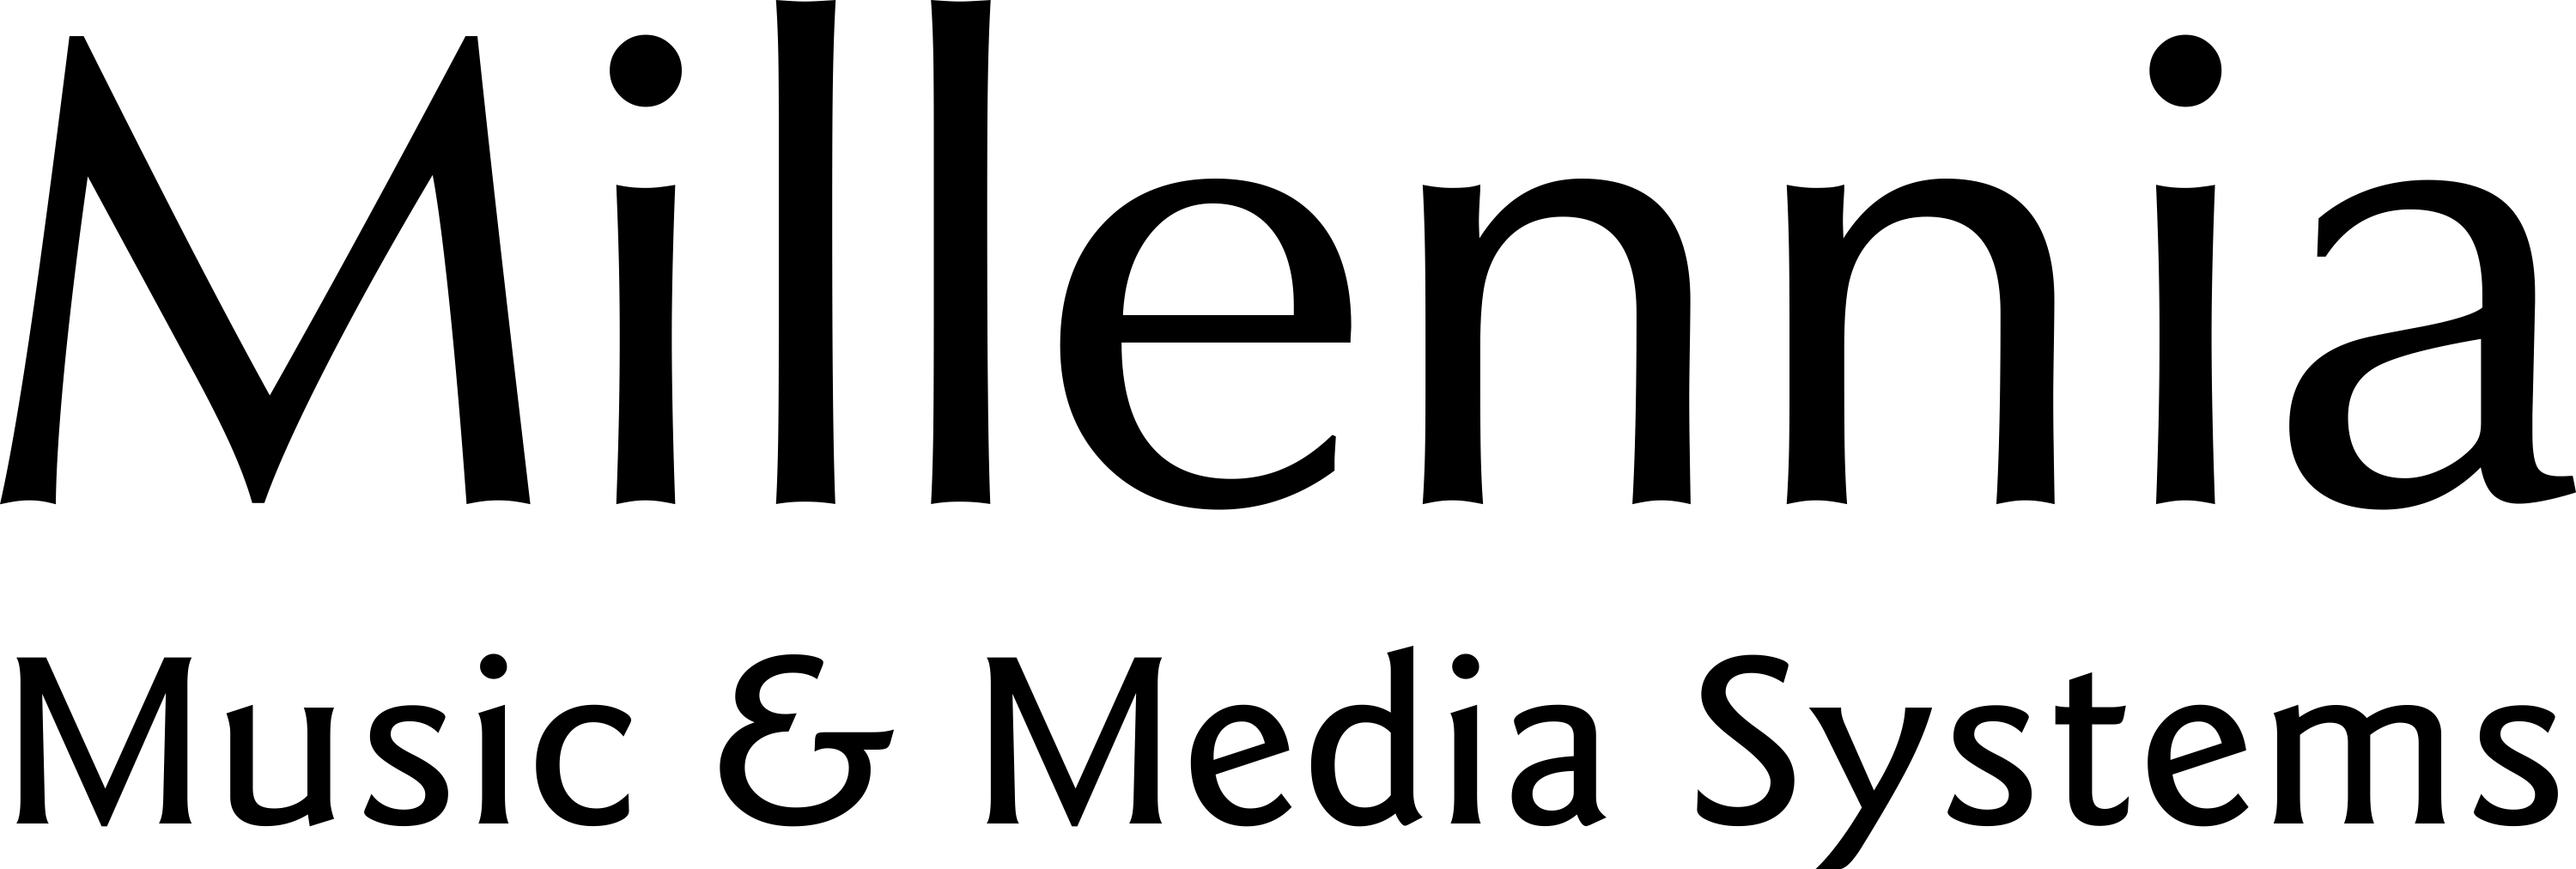 MM Logo PNG Transparent